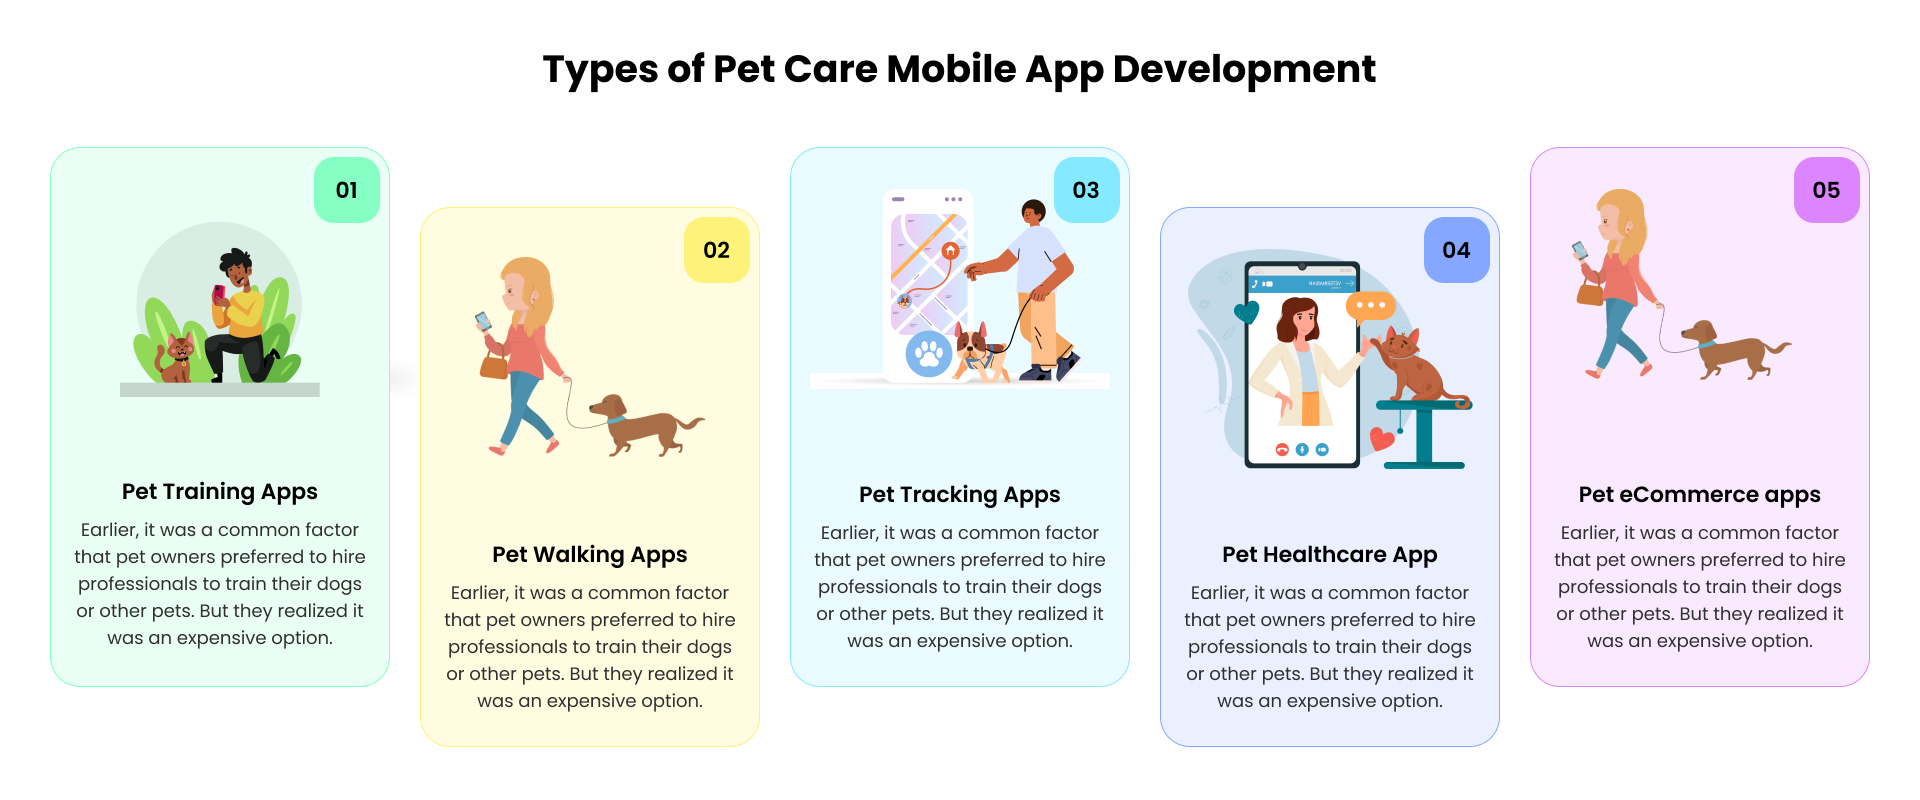 Types of pet care mobile app development